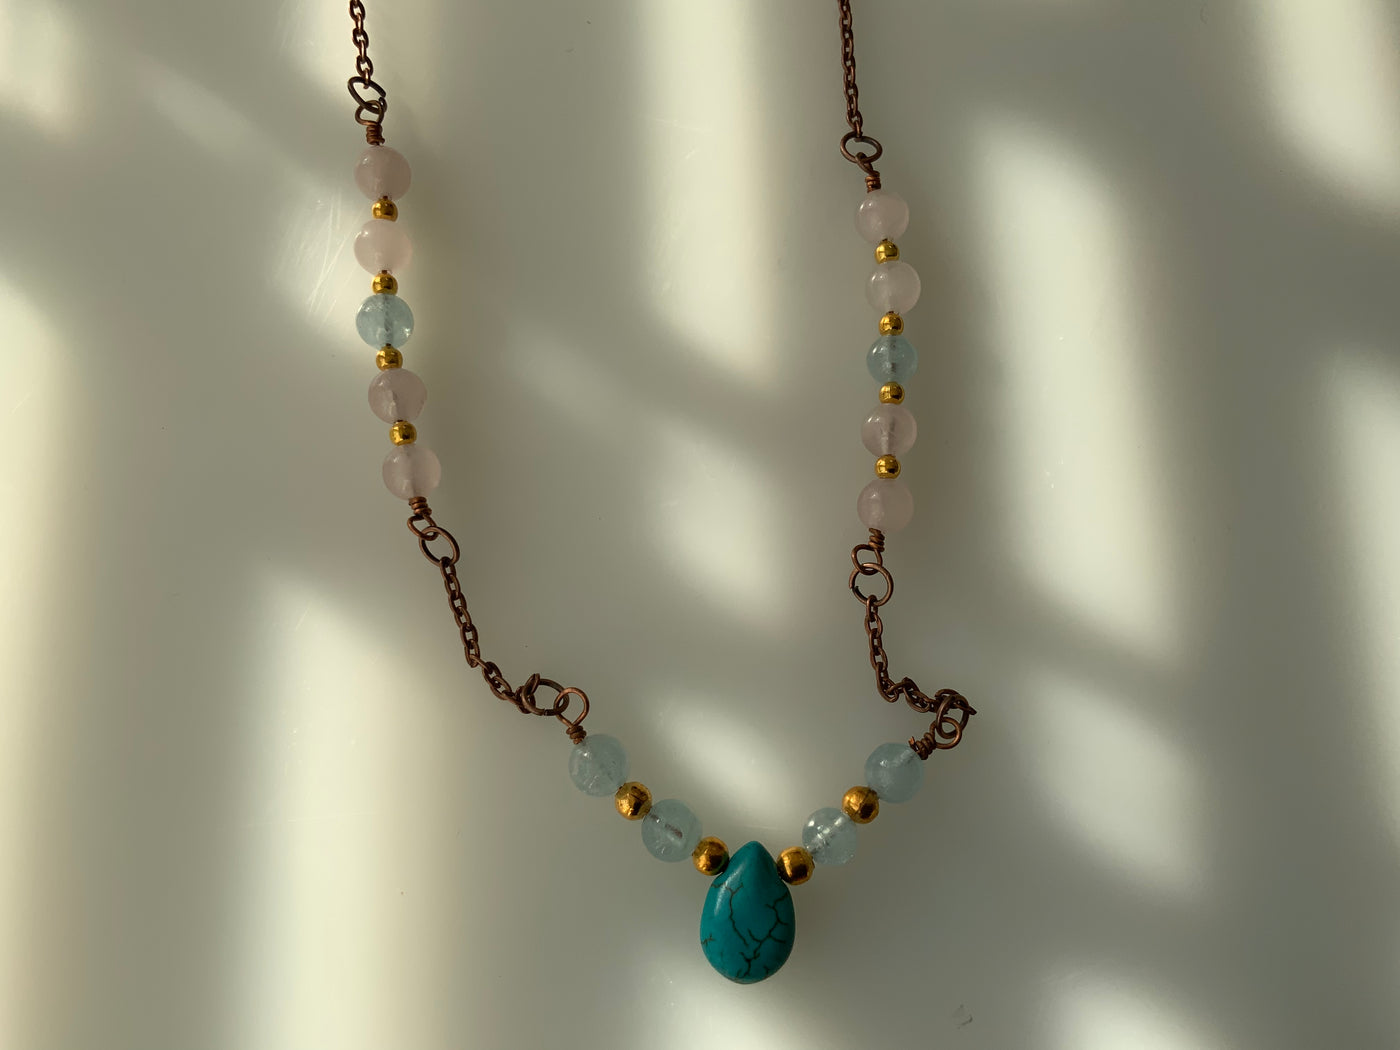 Blue howlite briolette, acquamarine, and rose quartz in chain necklace.